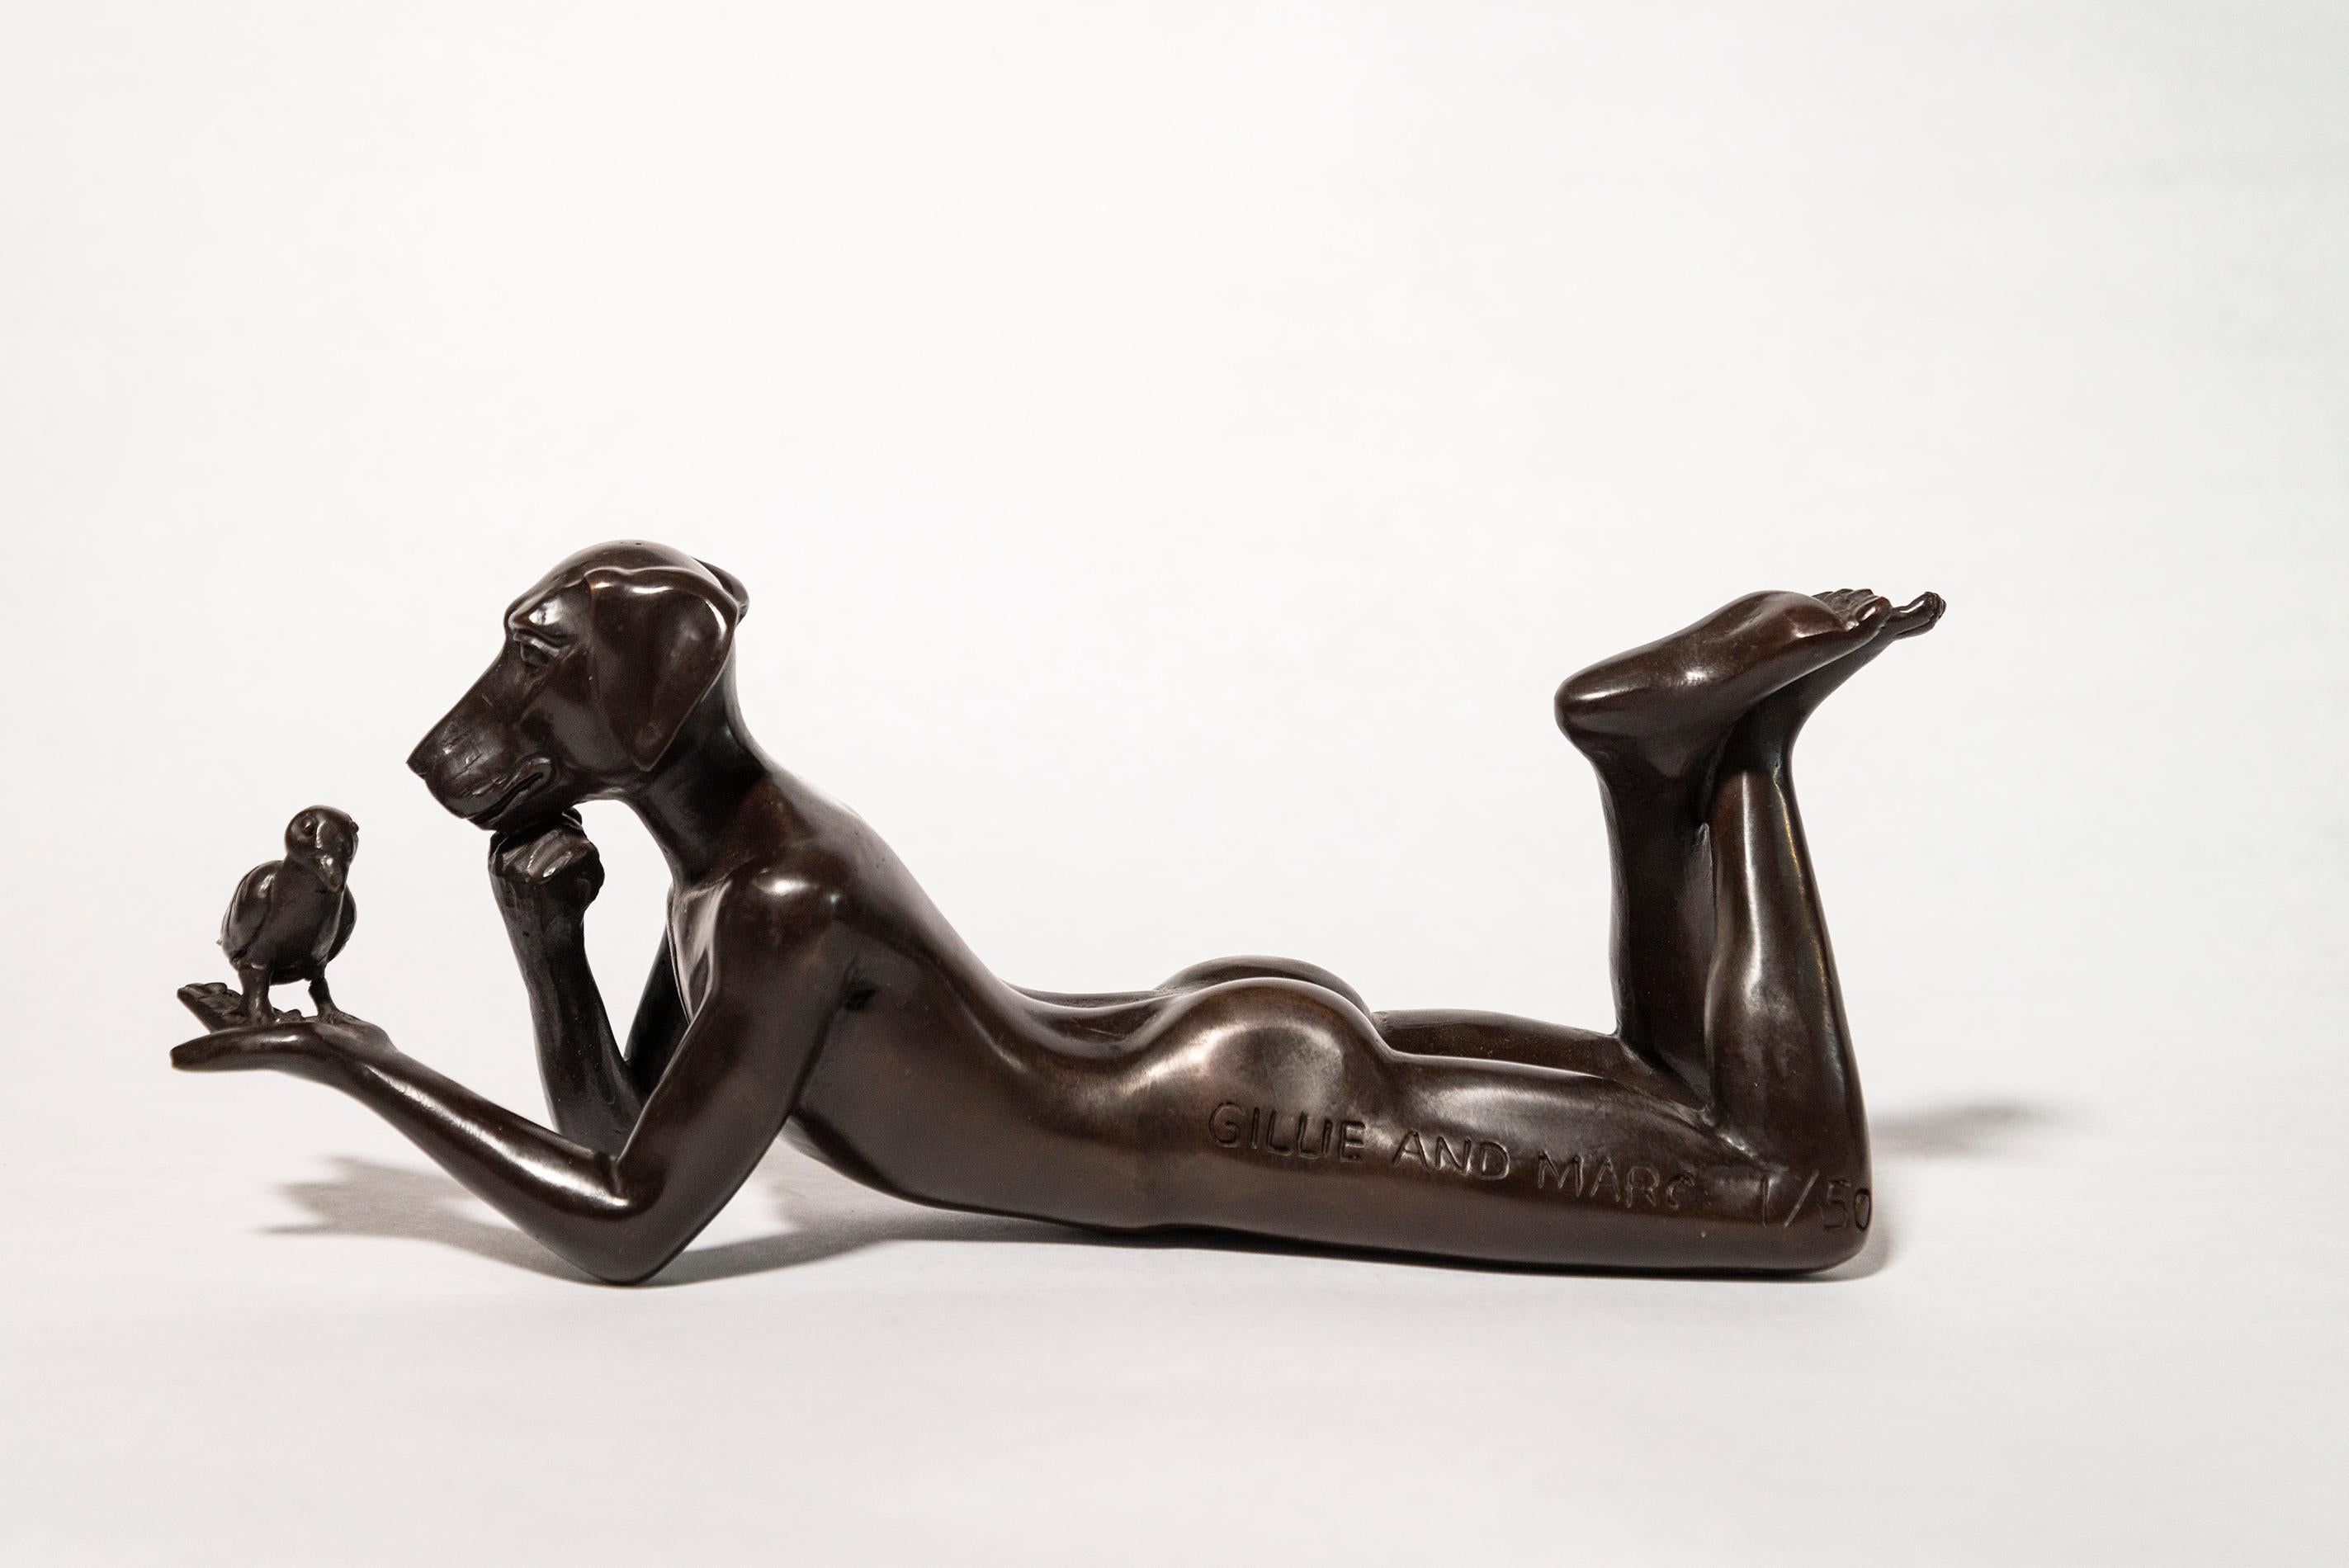 Dogman thought a bird in the hand is always better 1/50 - bronze sculpture - Sculpture by Gillie and Marc Schattner